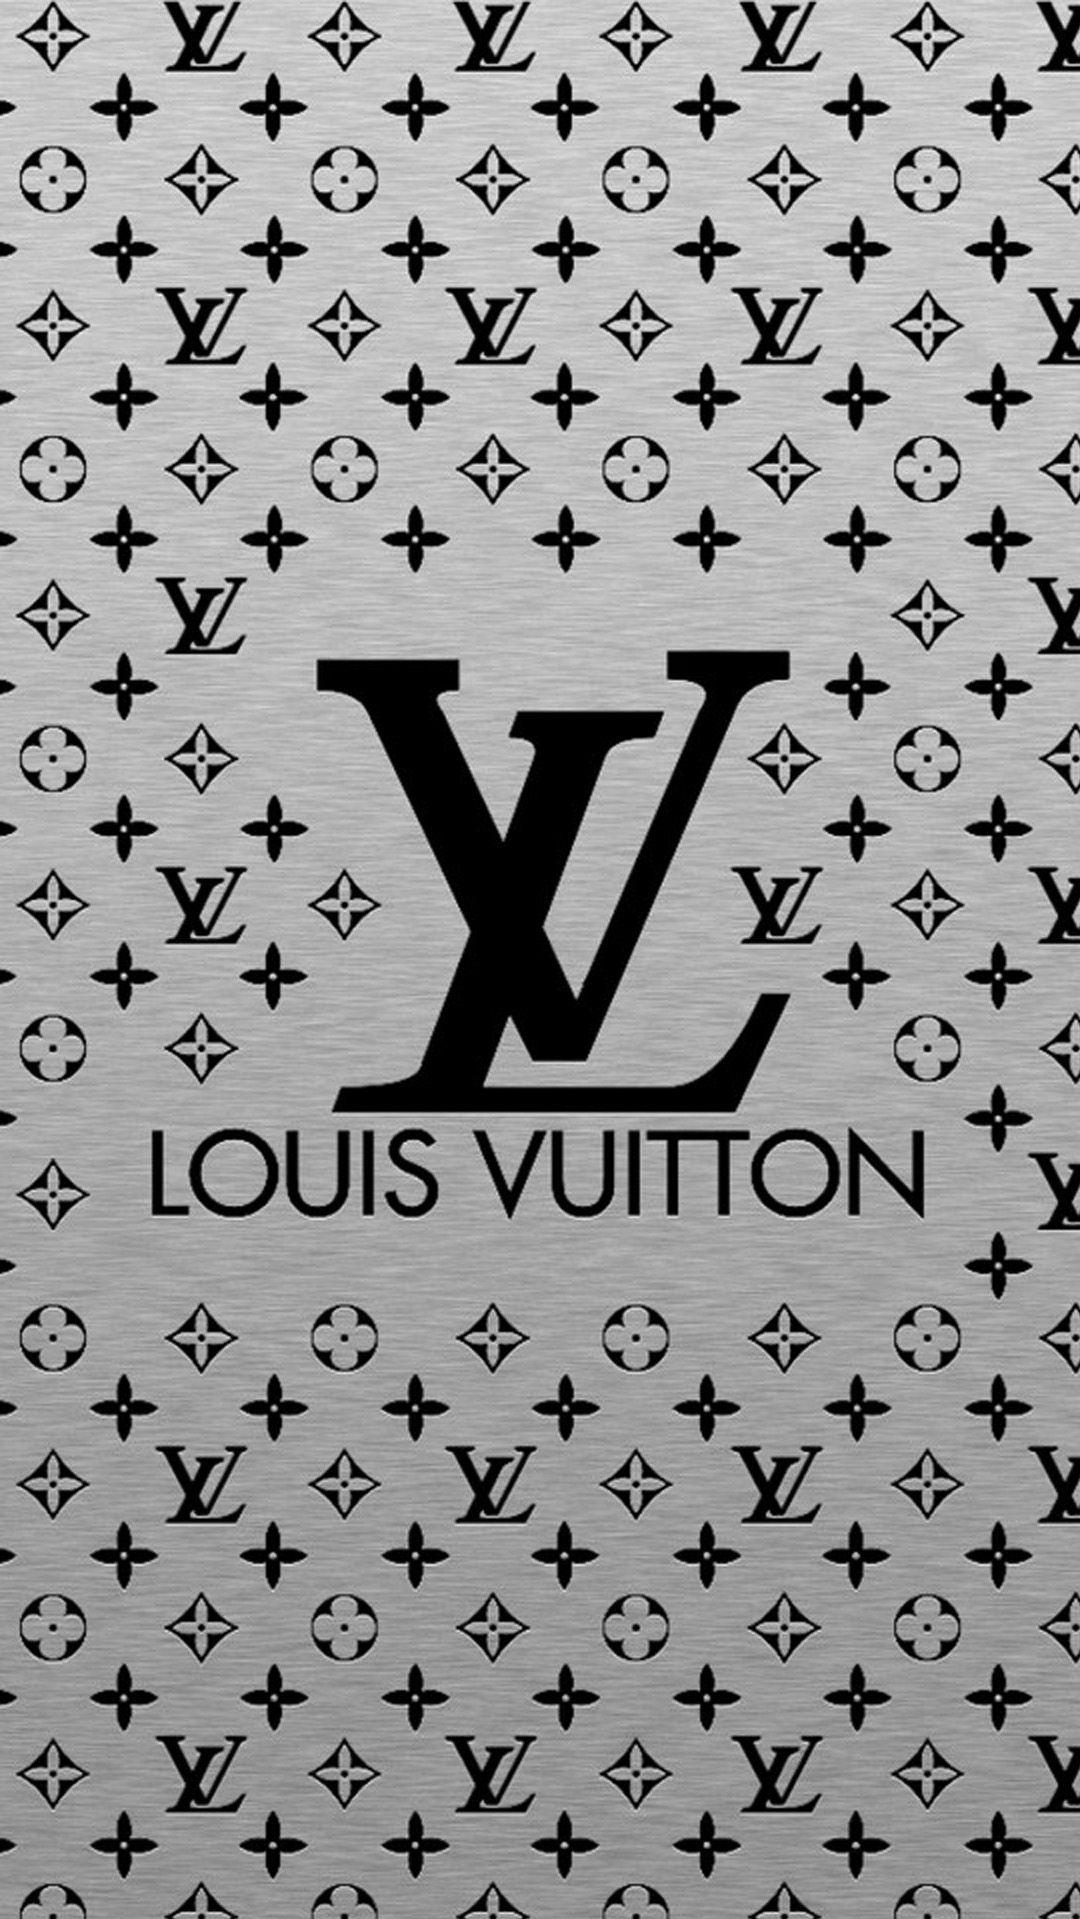 Download Teal Aesthetic Louis Vuitton Phone Wallpaper